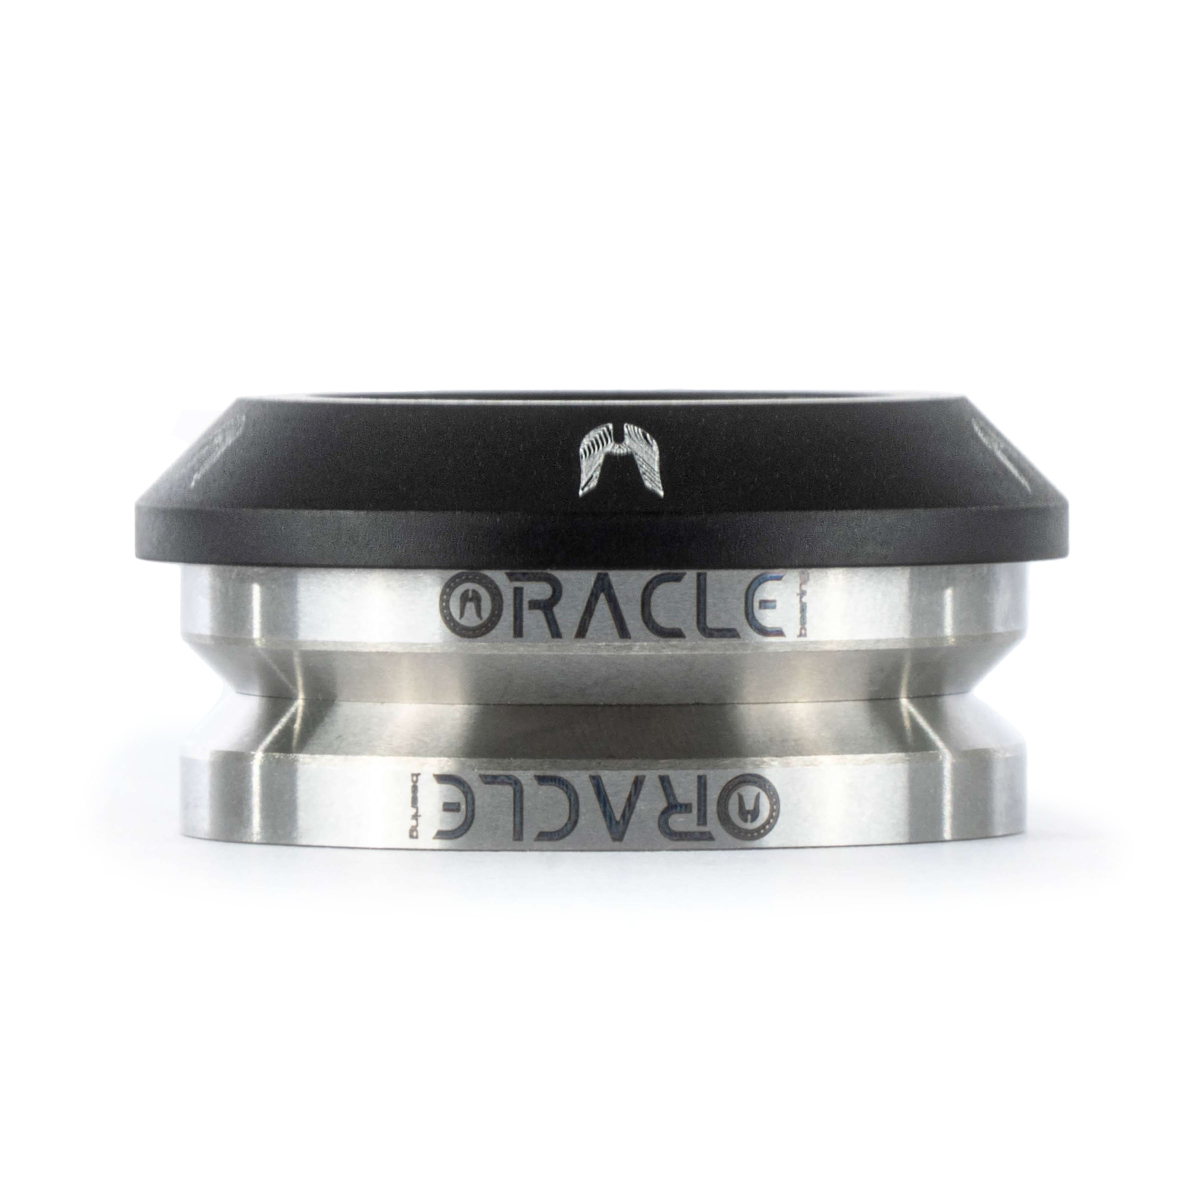 Ethic DTC Headset Oracle Noir